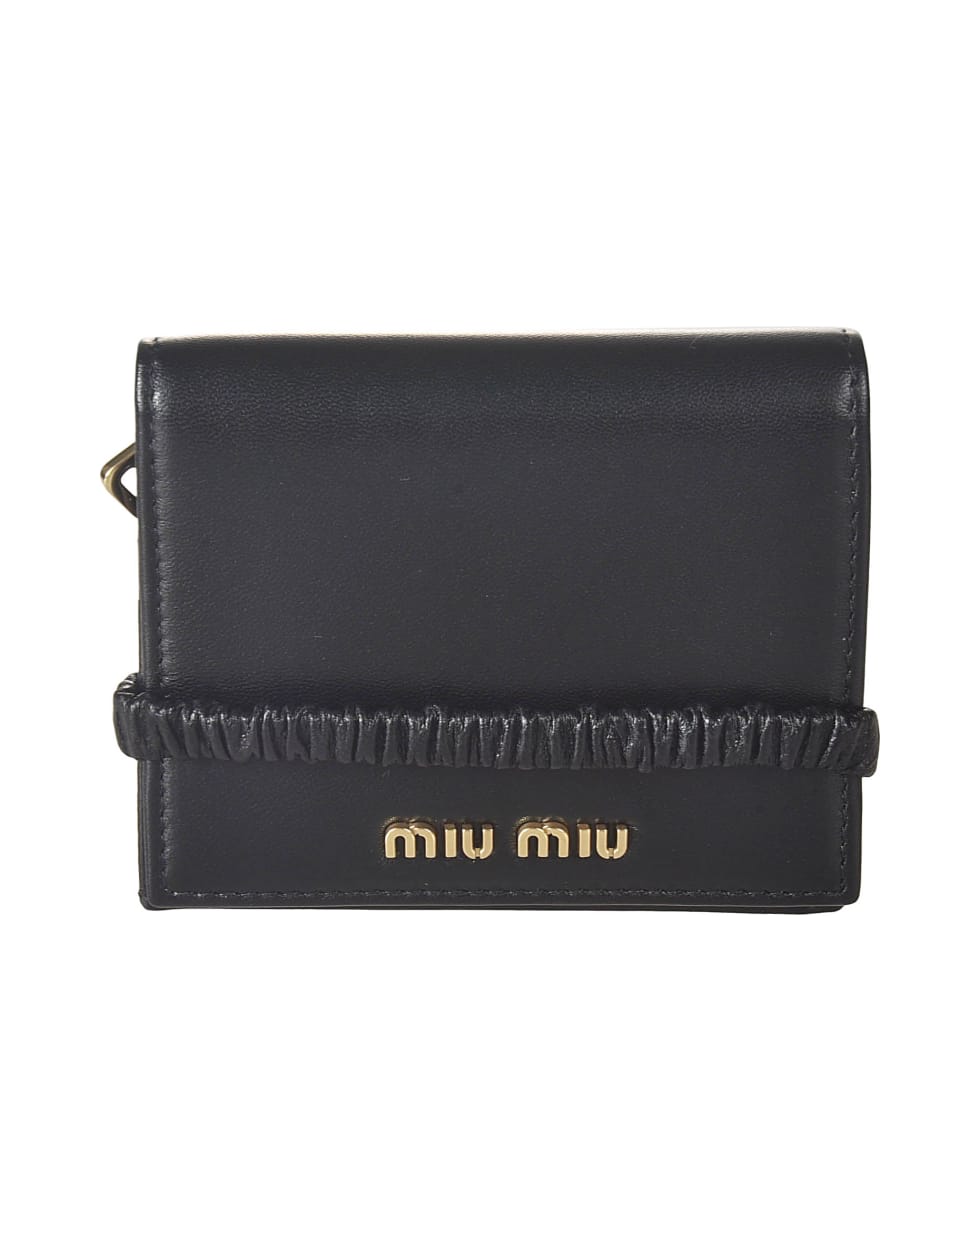 Miu Miu Metallic Foldover Wallet - Black